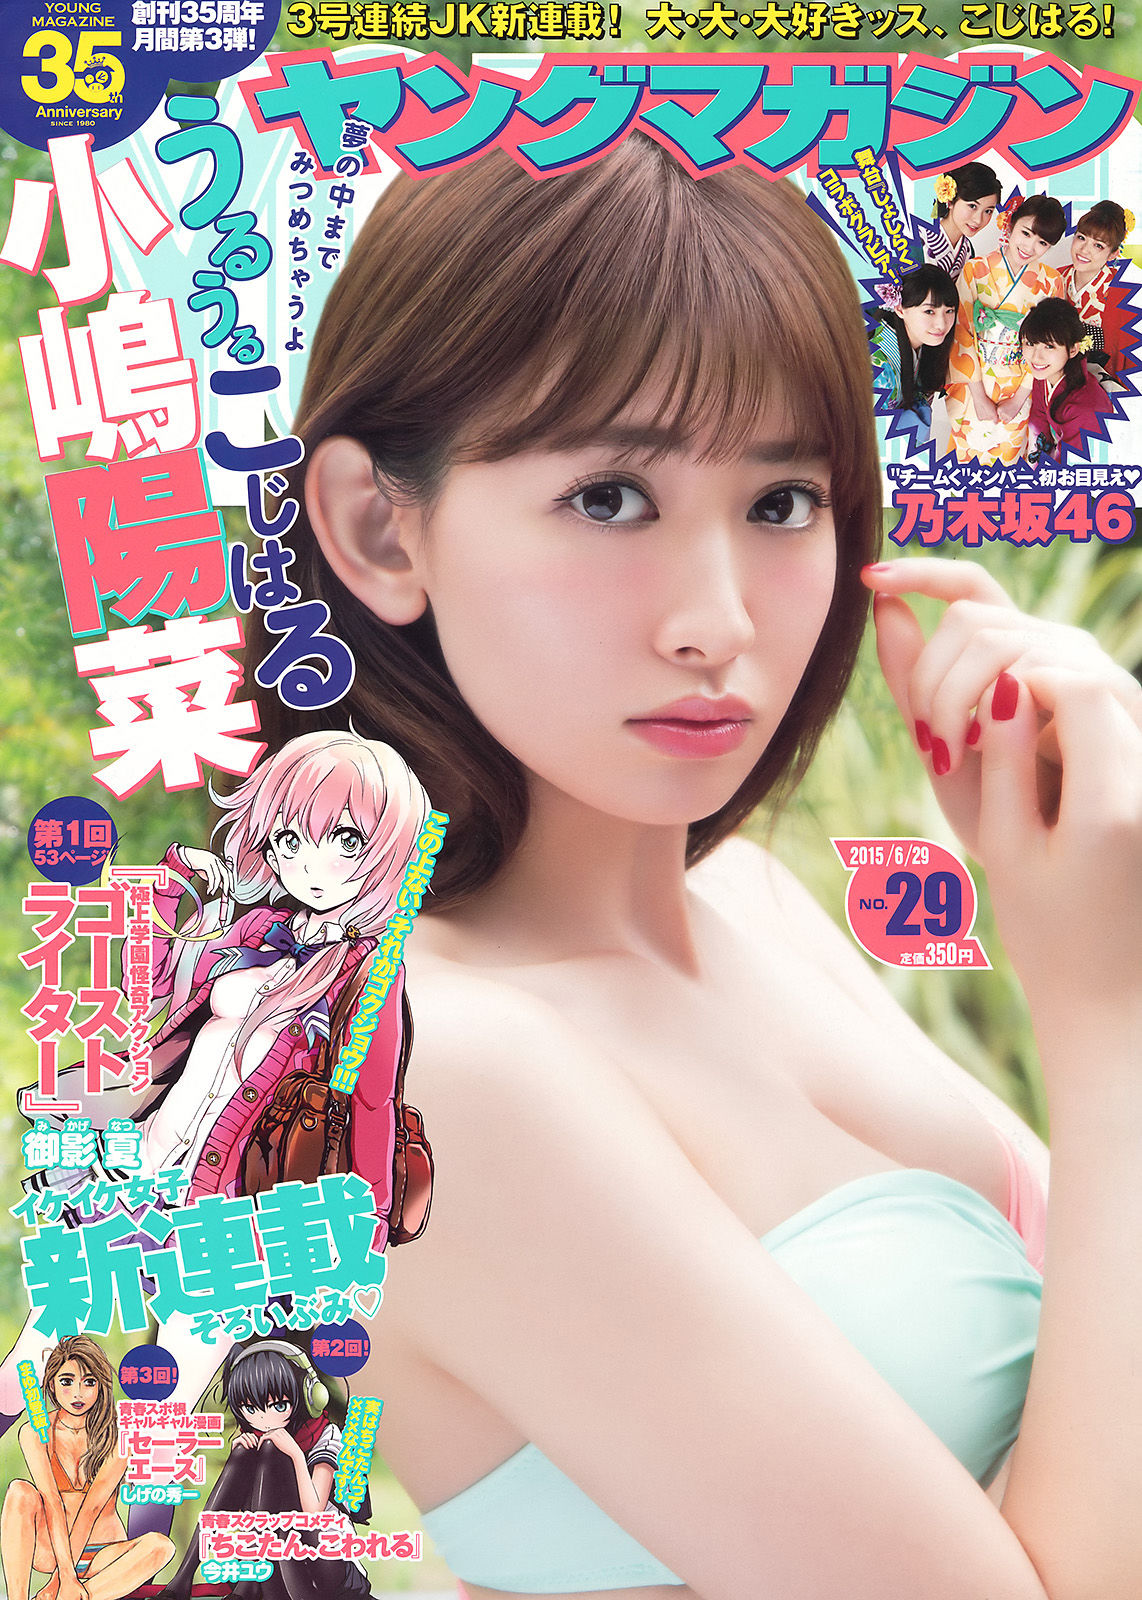 [Young Magazine] 2015年No.29 小嶋陽菜 乃木坂46